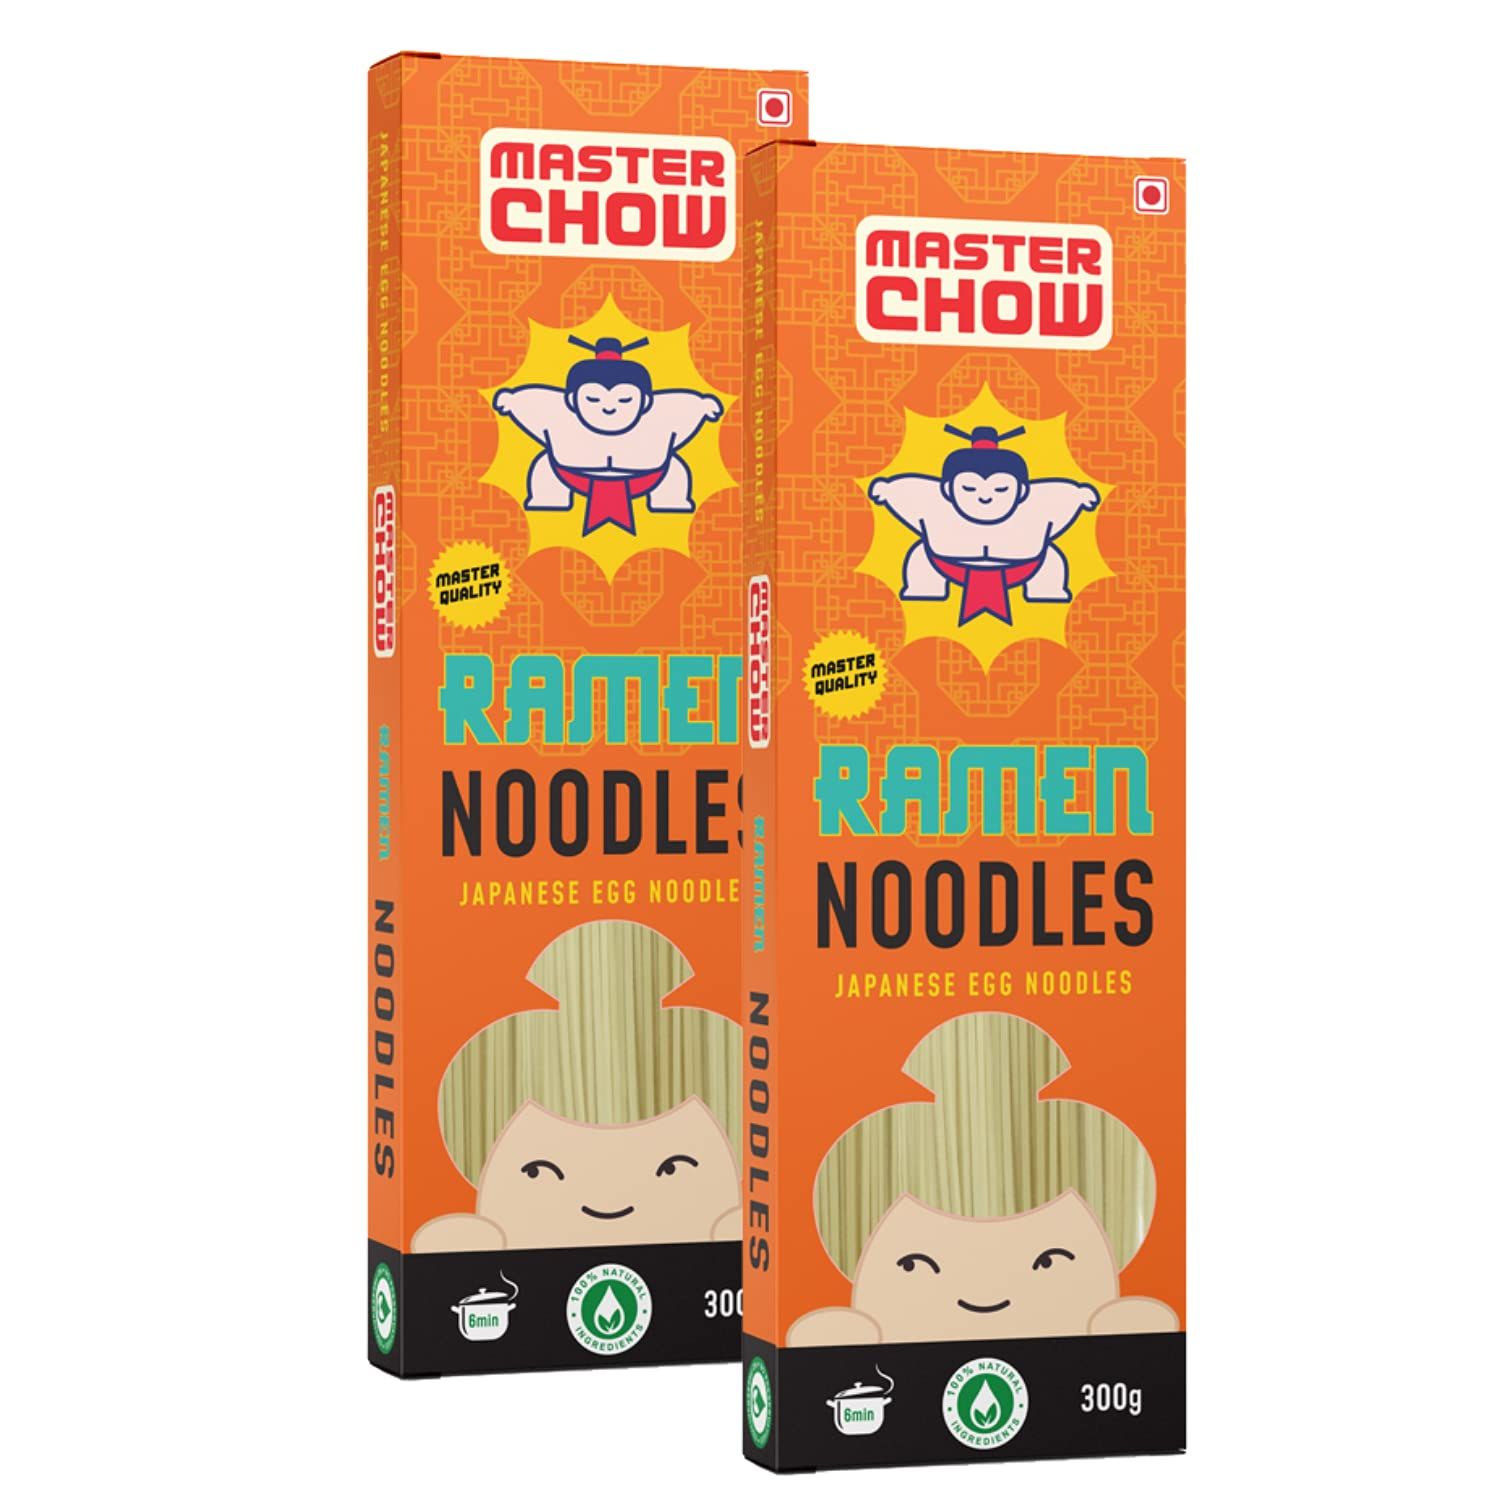 Master Chow Ramen Noodles Image